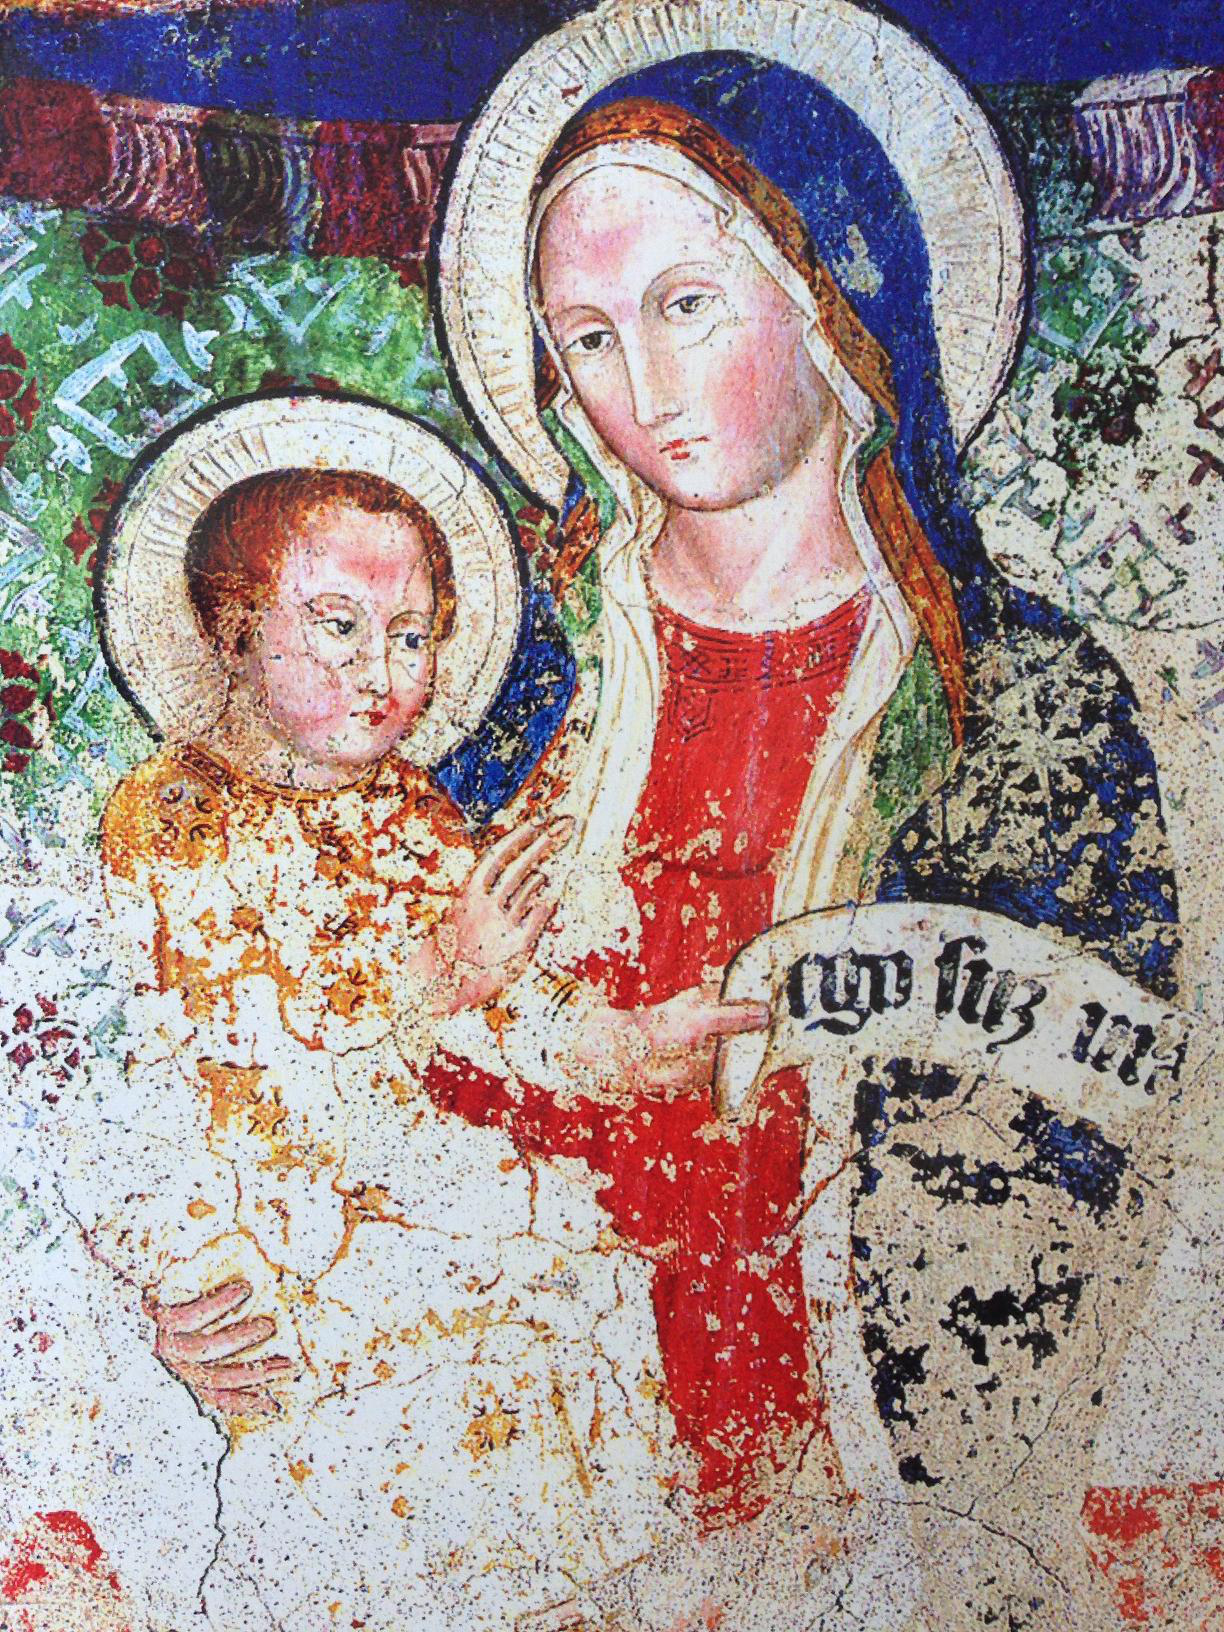 Stille im schönen Kreuzgang von San Giacomo Madonna mit Kind. Bild: Postkarte Covento S. Giacomo, Foto e Composizione Fr. Nicola